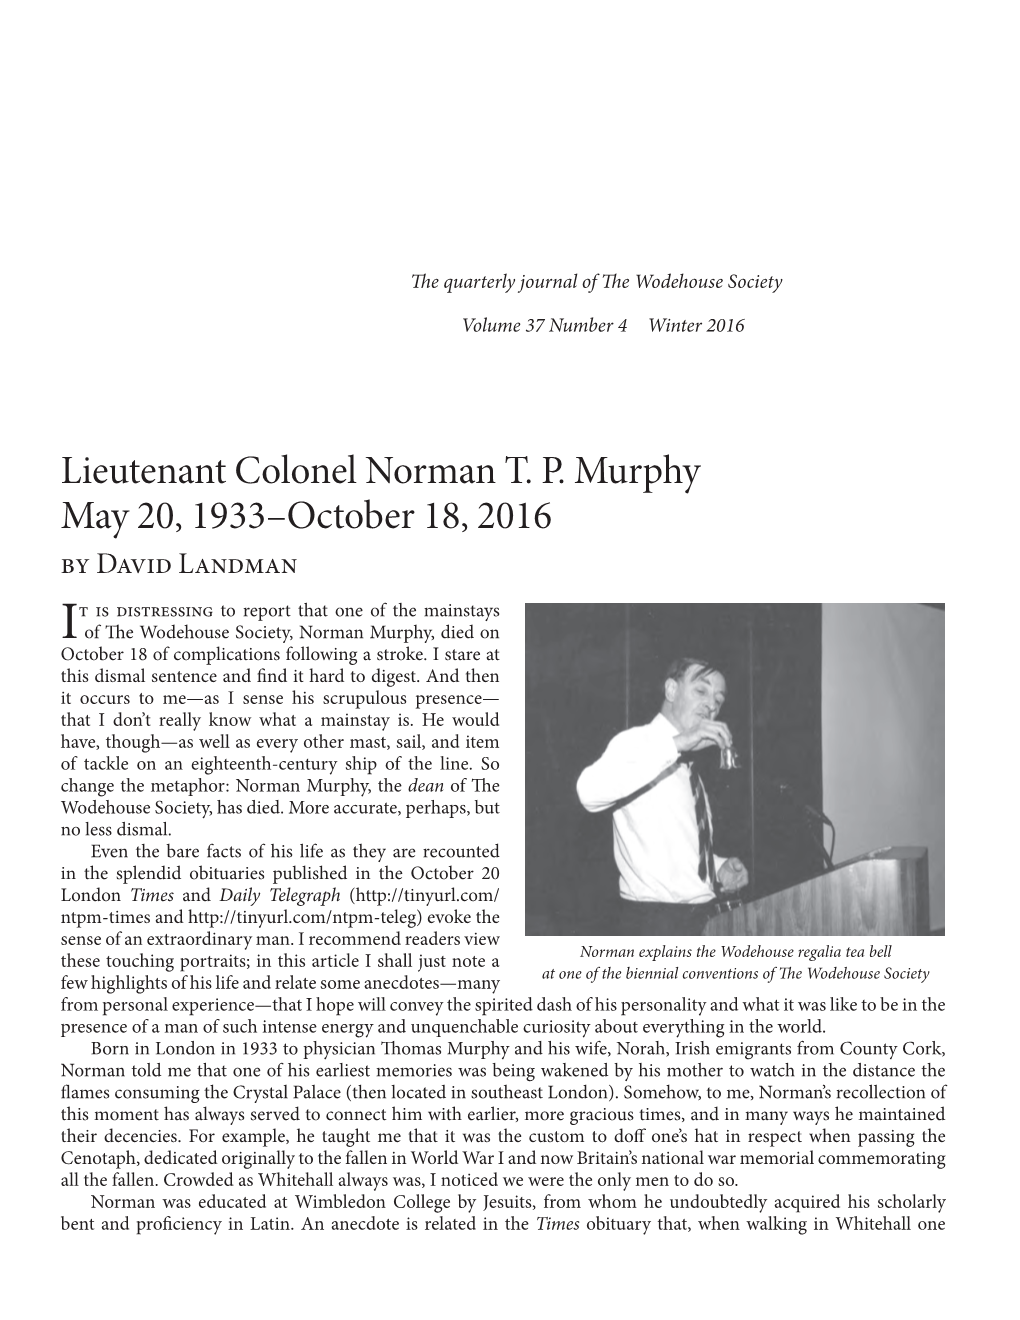 Lieutenant Colonel Norman T. P. Murphy May 20, 1933–October 18, 2016 by David Landman